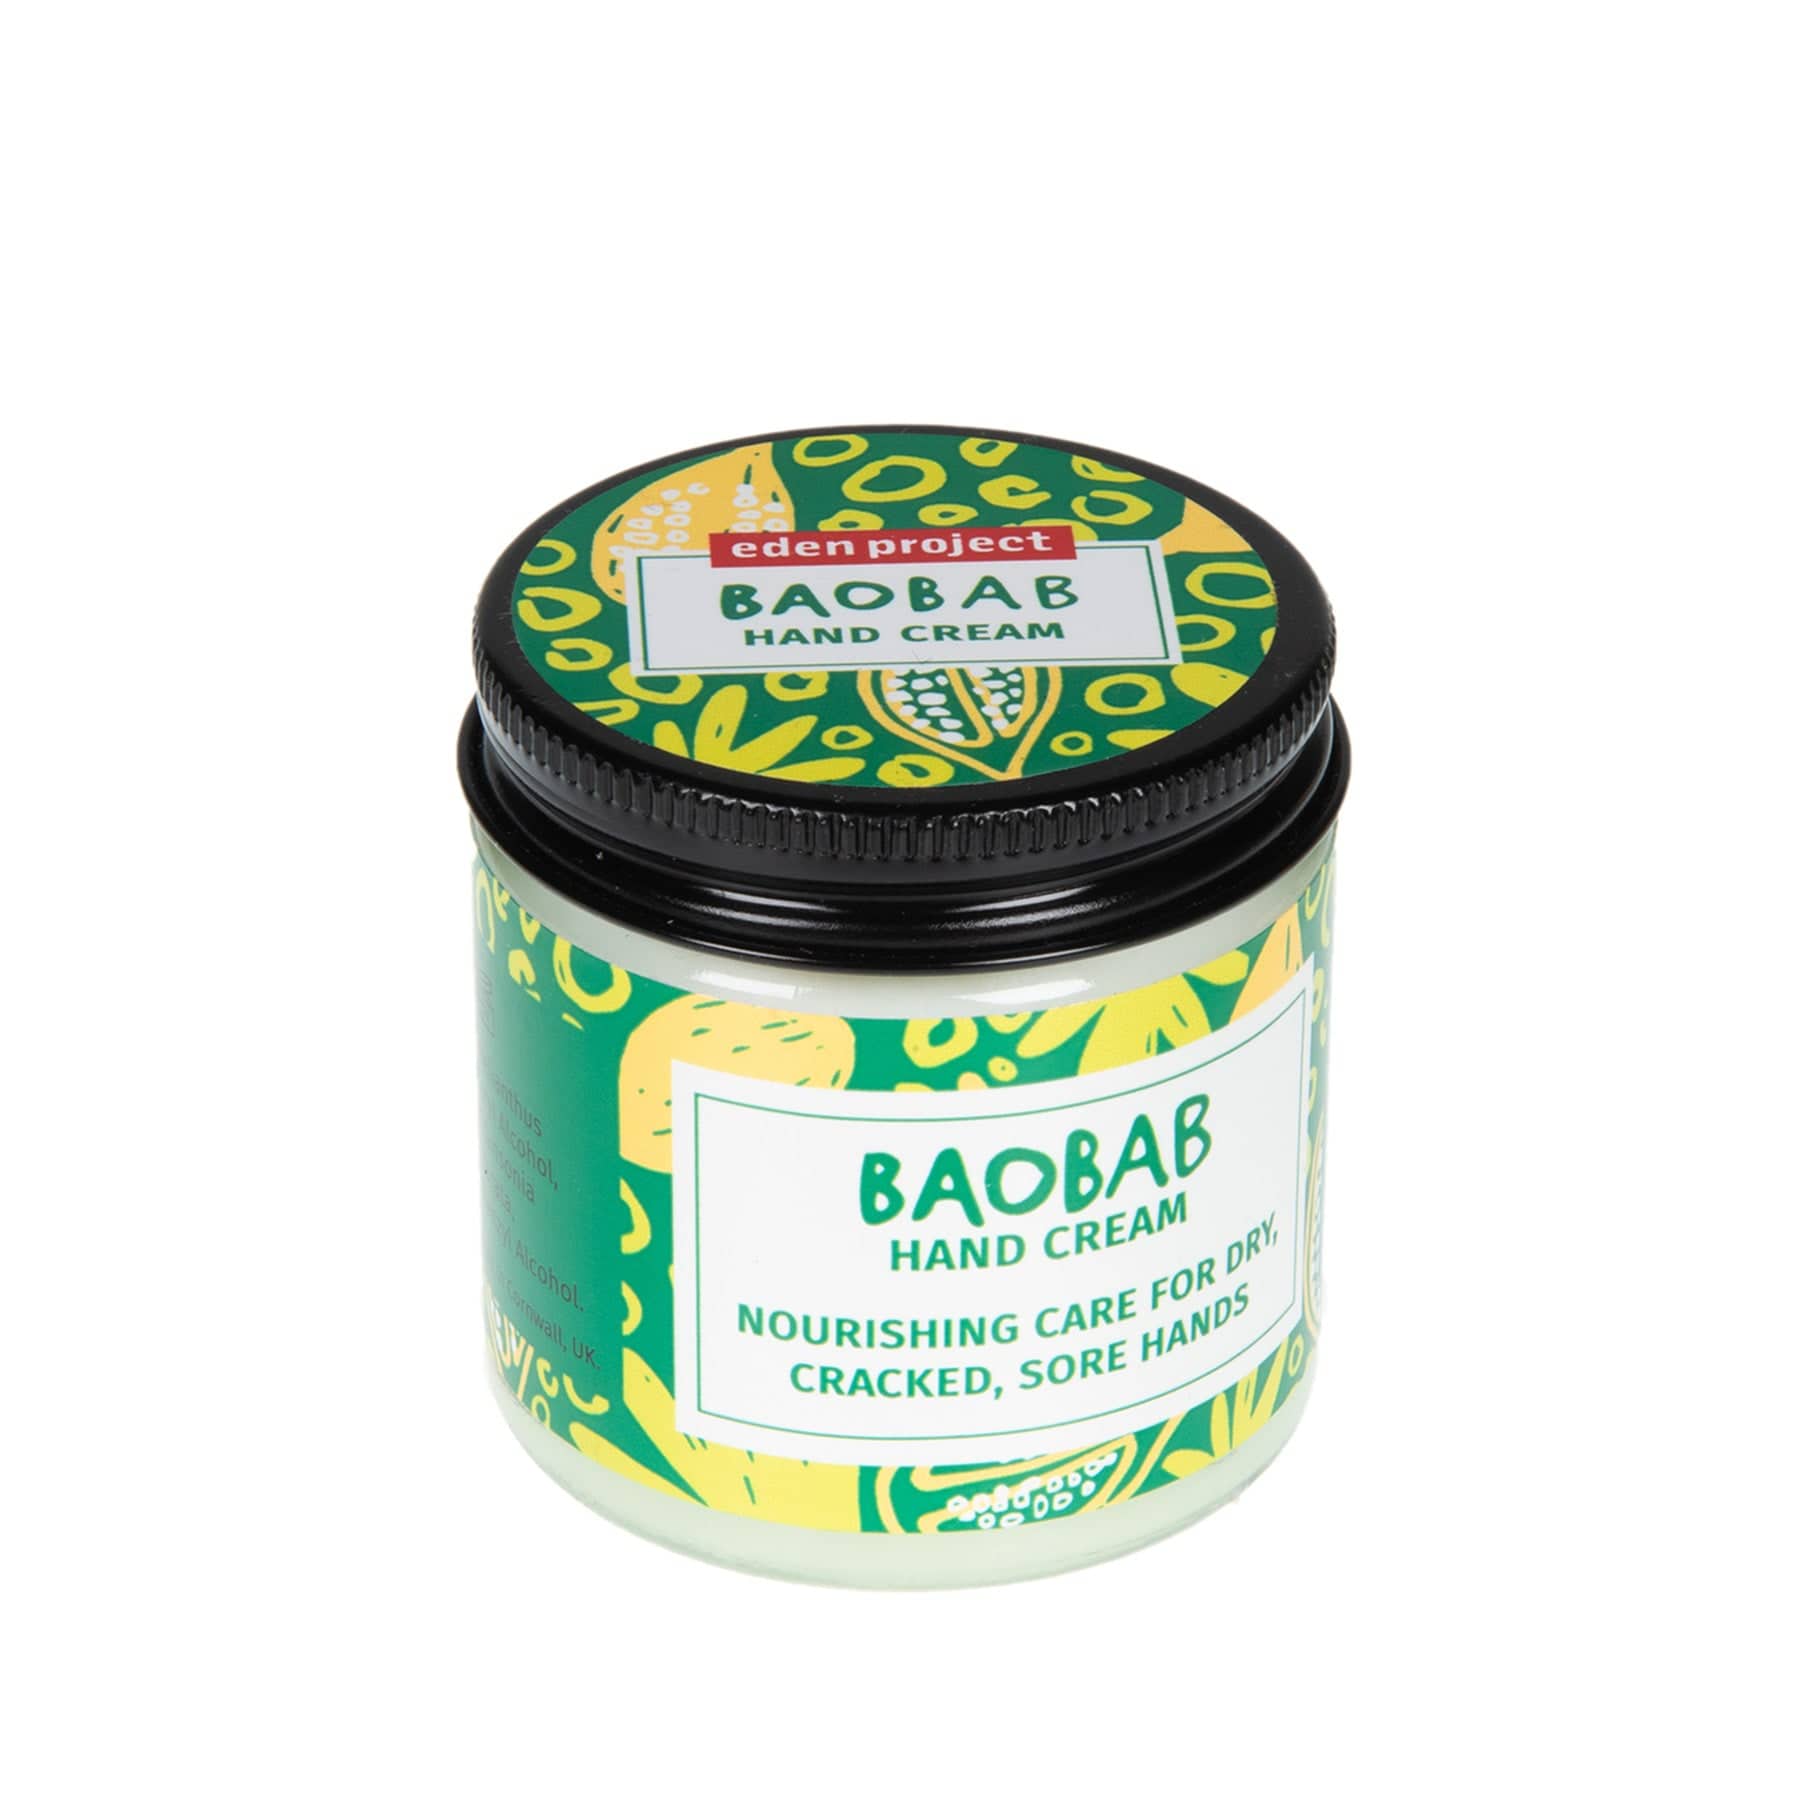 Baobab hand cream